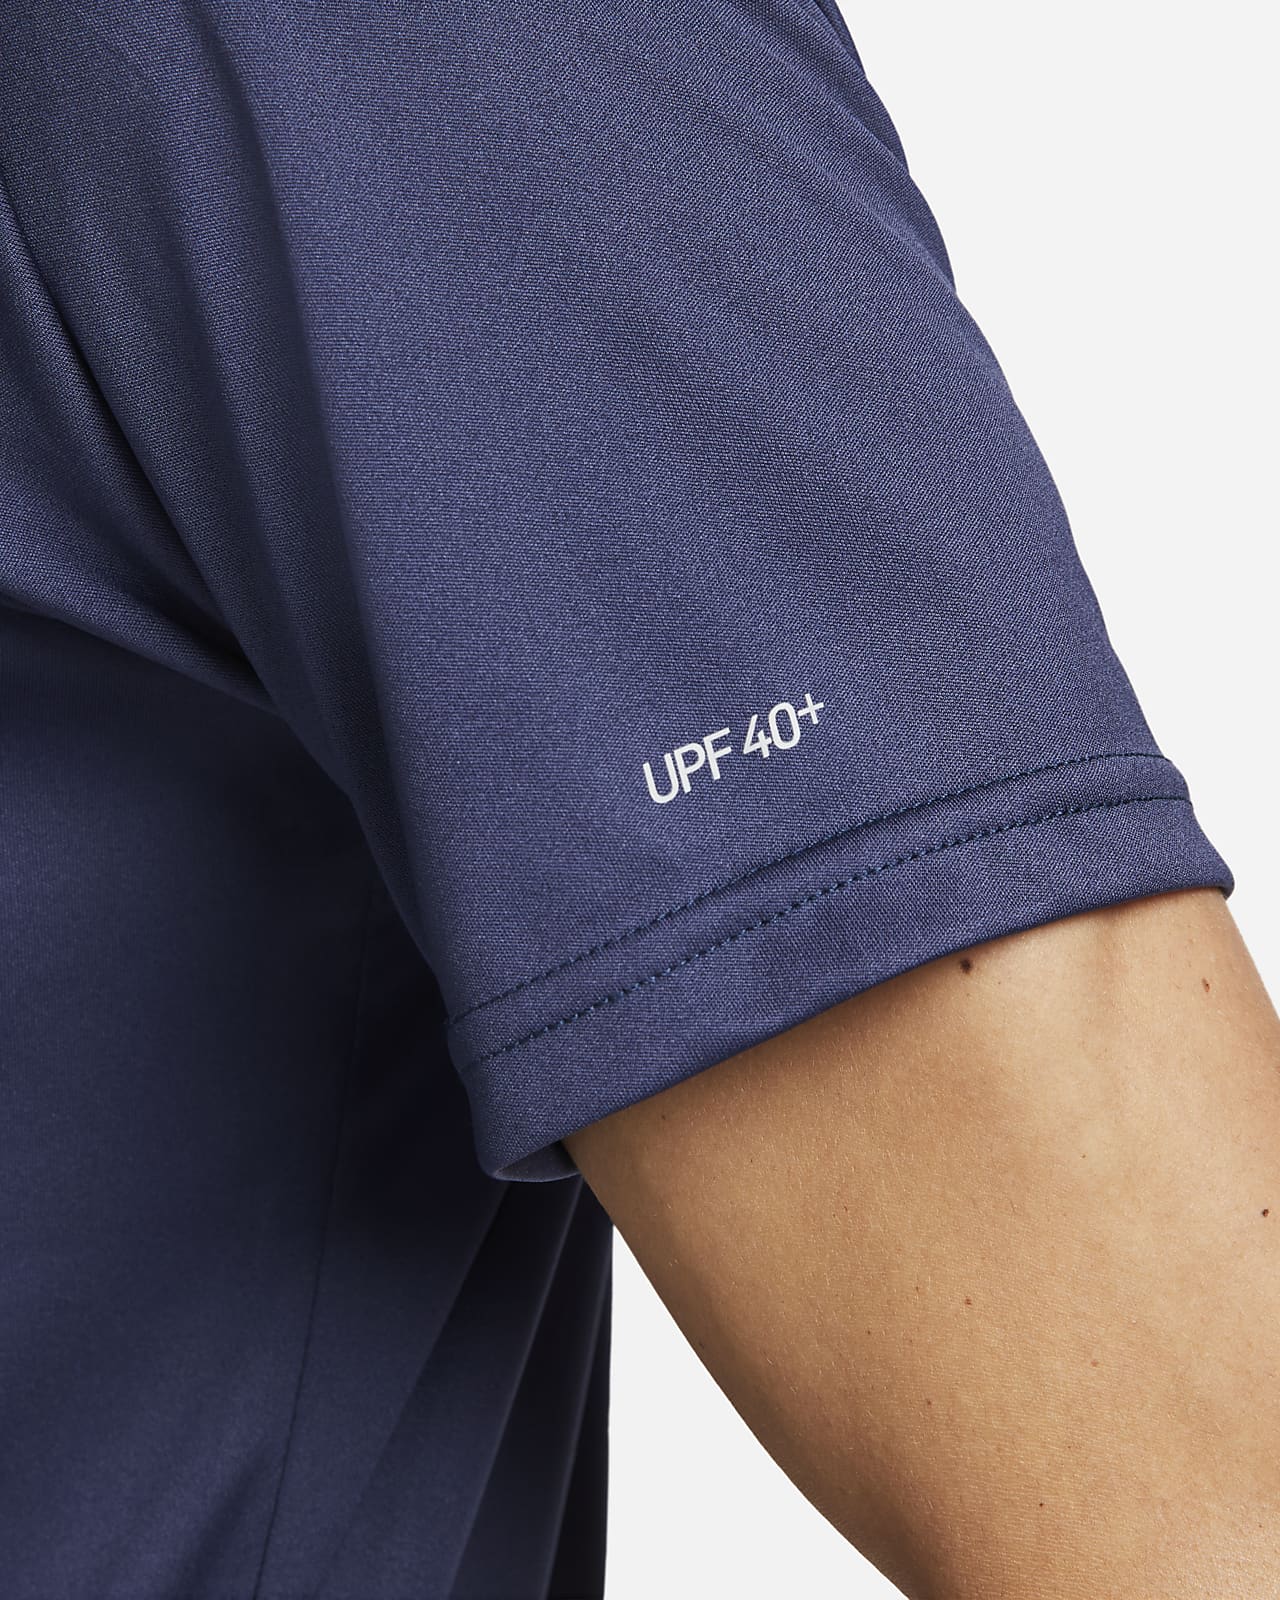 Nike Men's Essential Short Sleeve Hydroguard Shirt - Size XL